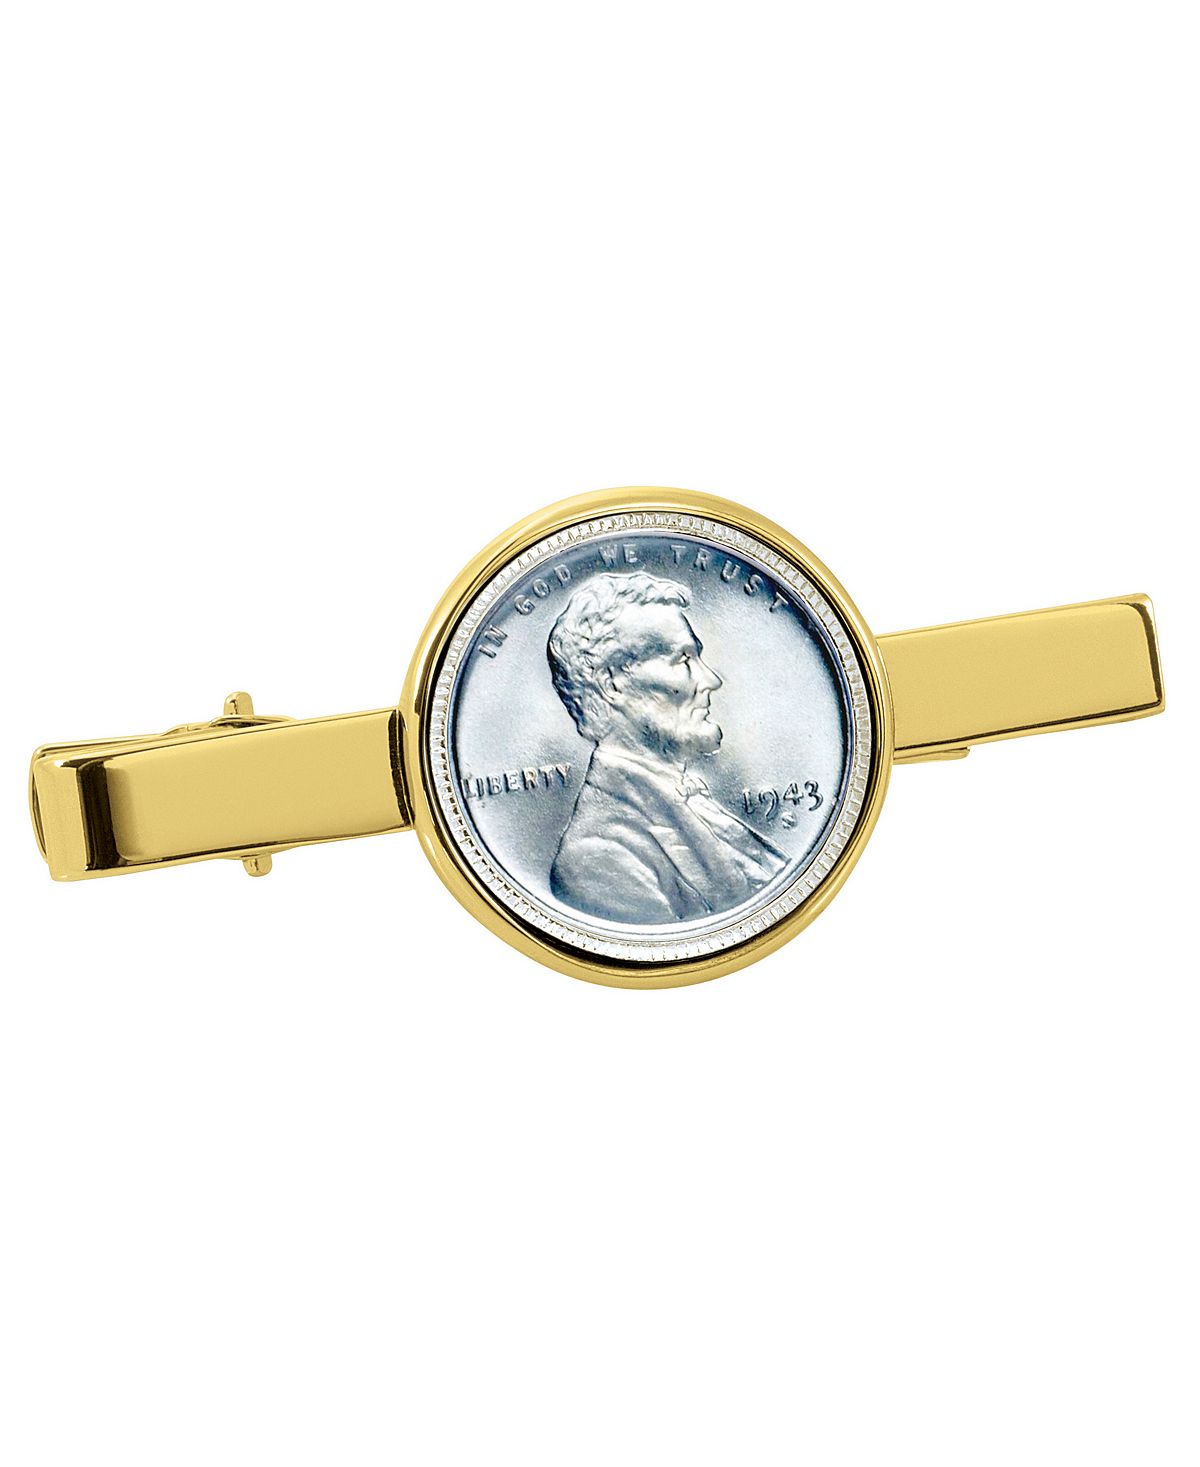 Зажим для галстука для монеты «Пенни» 1943 года из стали Линкольн American Coin Treasures 2021 maple leaf gold coin commonwealth queen s coin commemorative coin badge gift souvenir coins